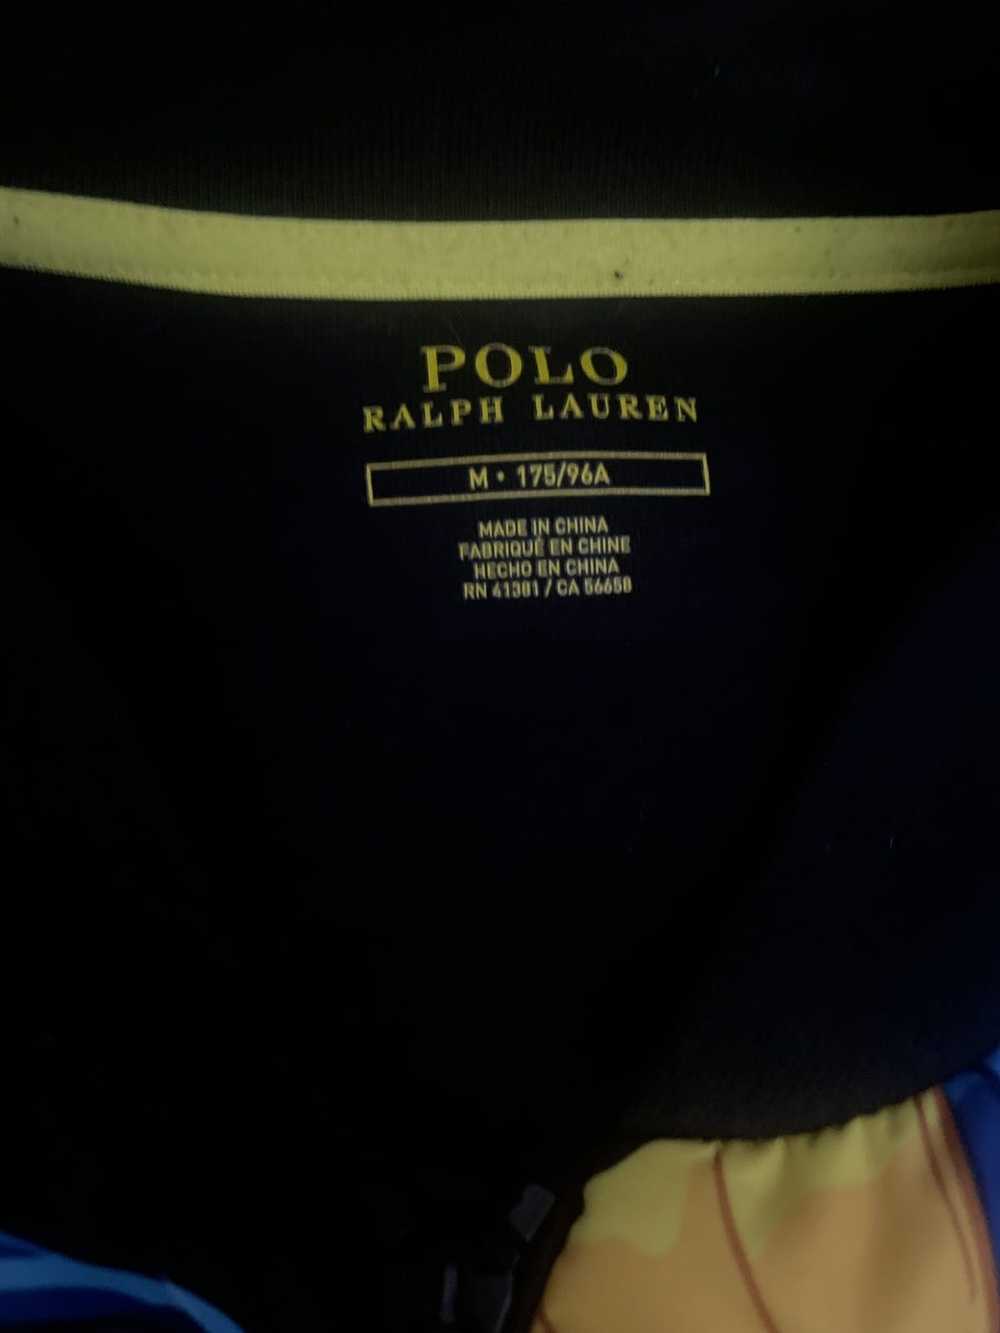 Polo Ralph Lauren Polo Ralph Lauren - image 5